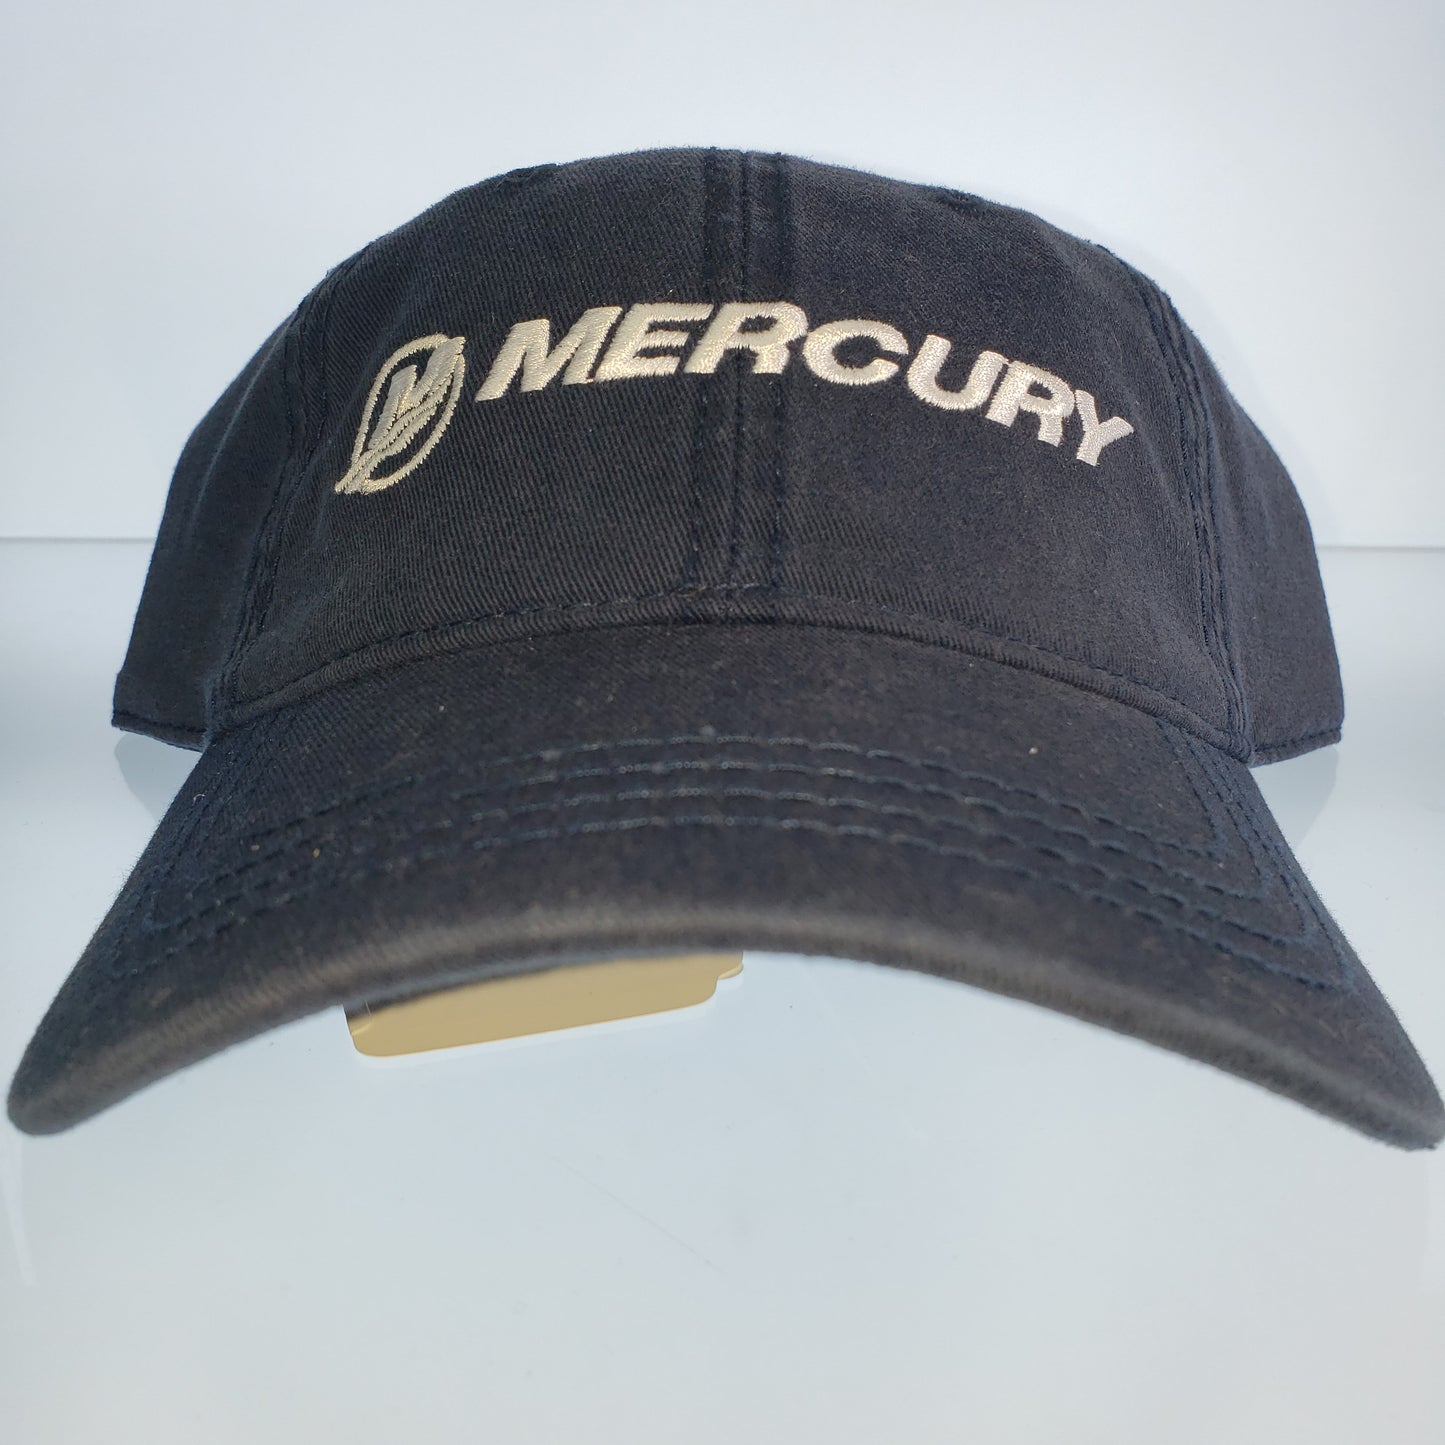 New Authentic Mercury Marine Twill Cloth Hat